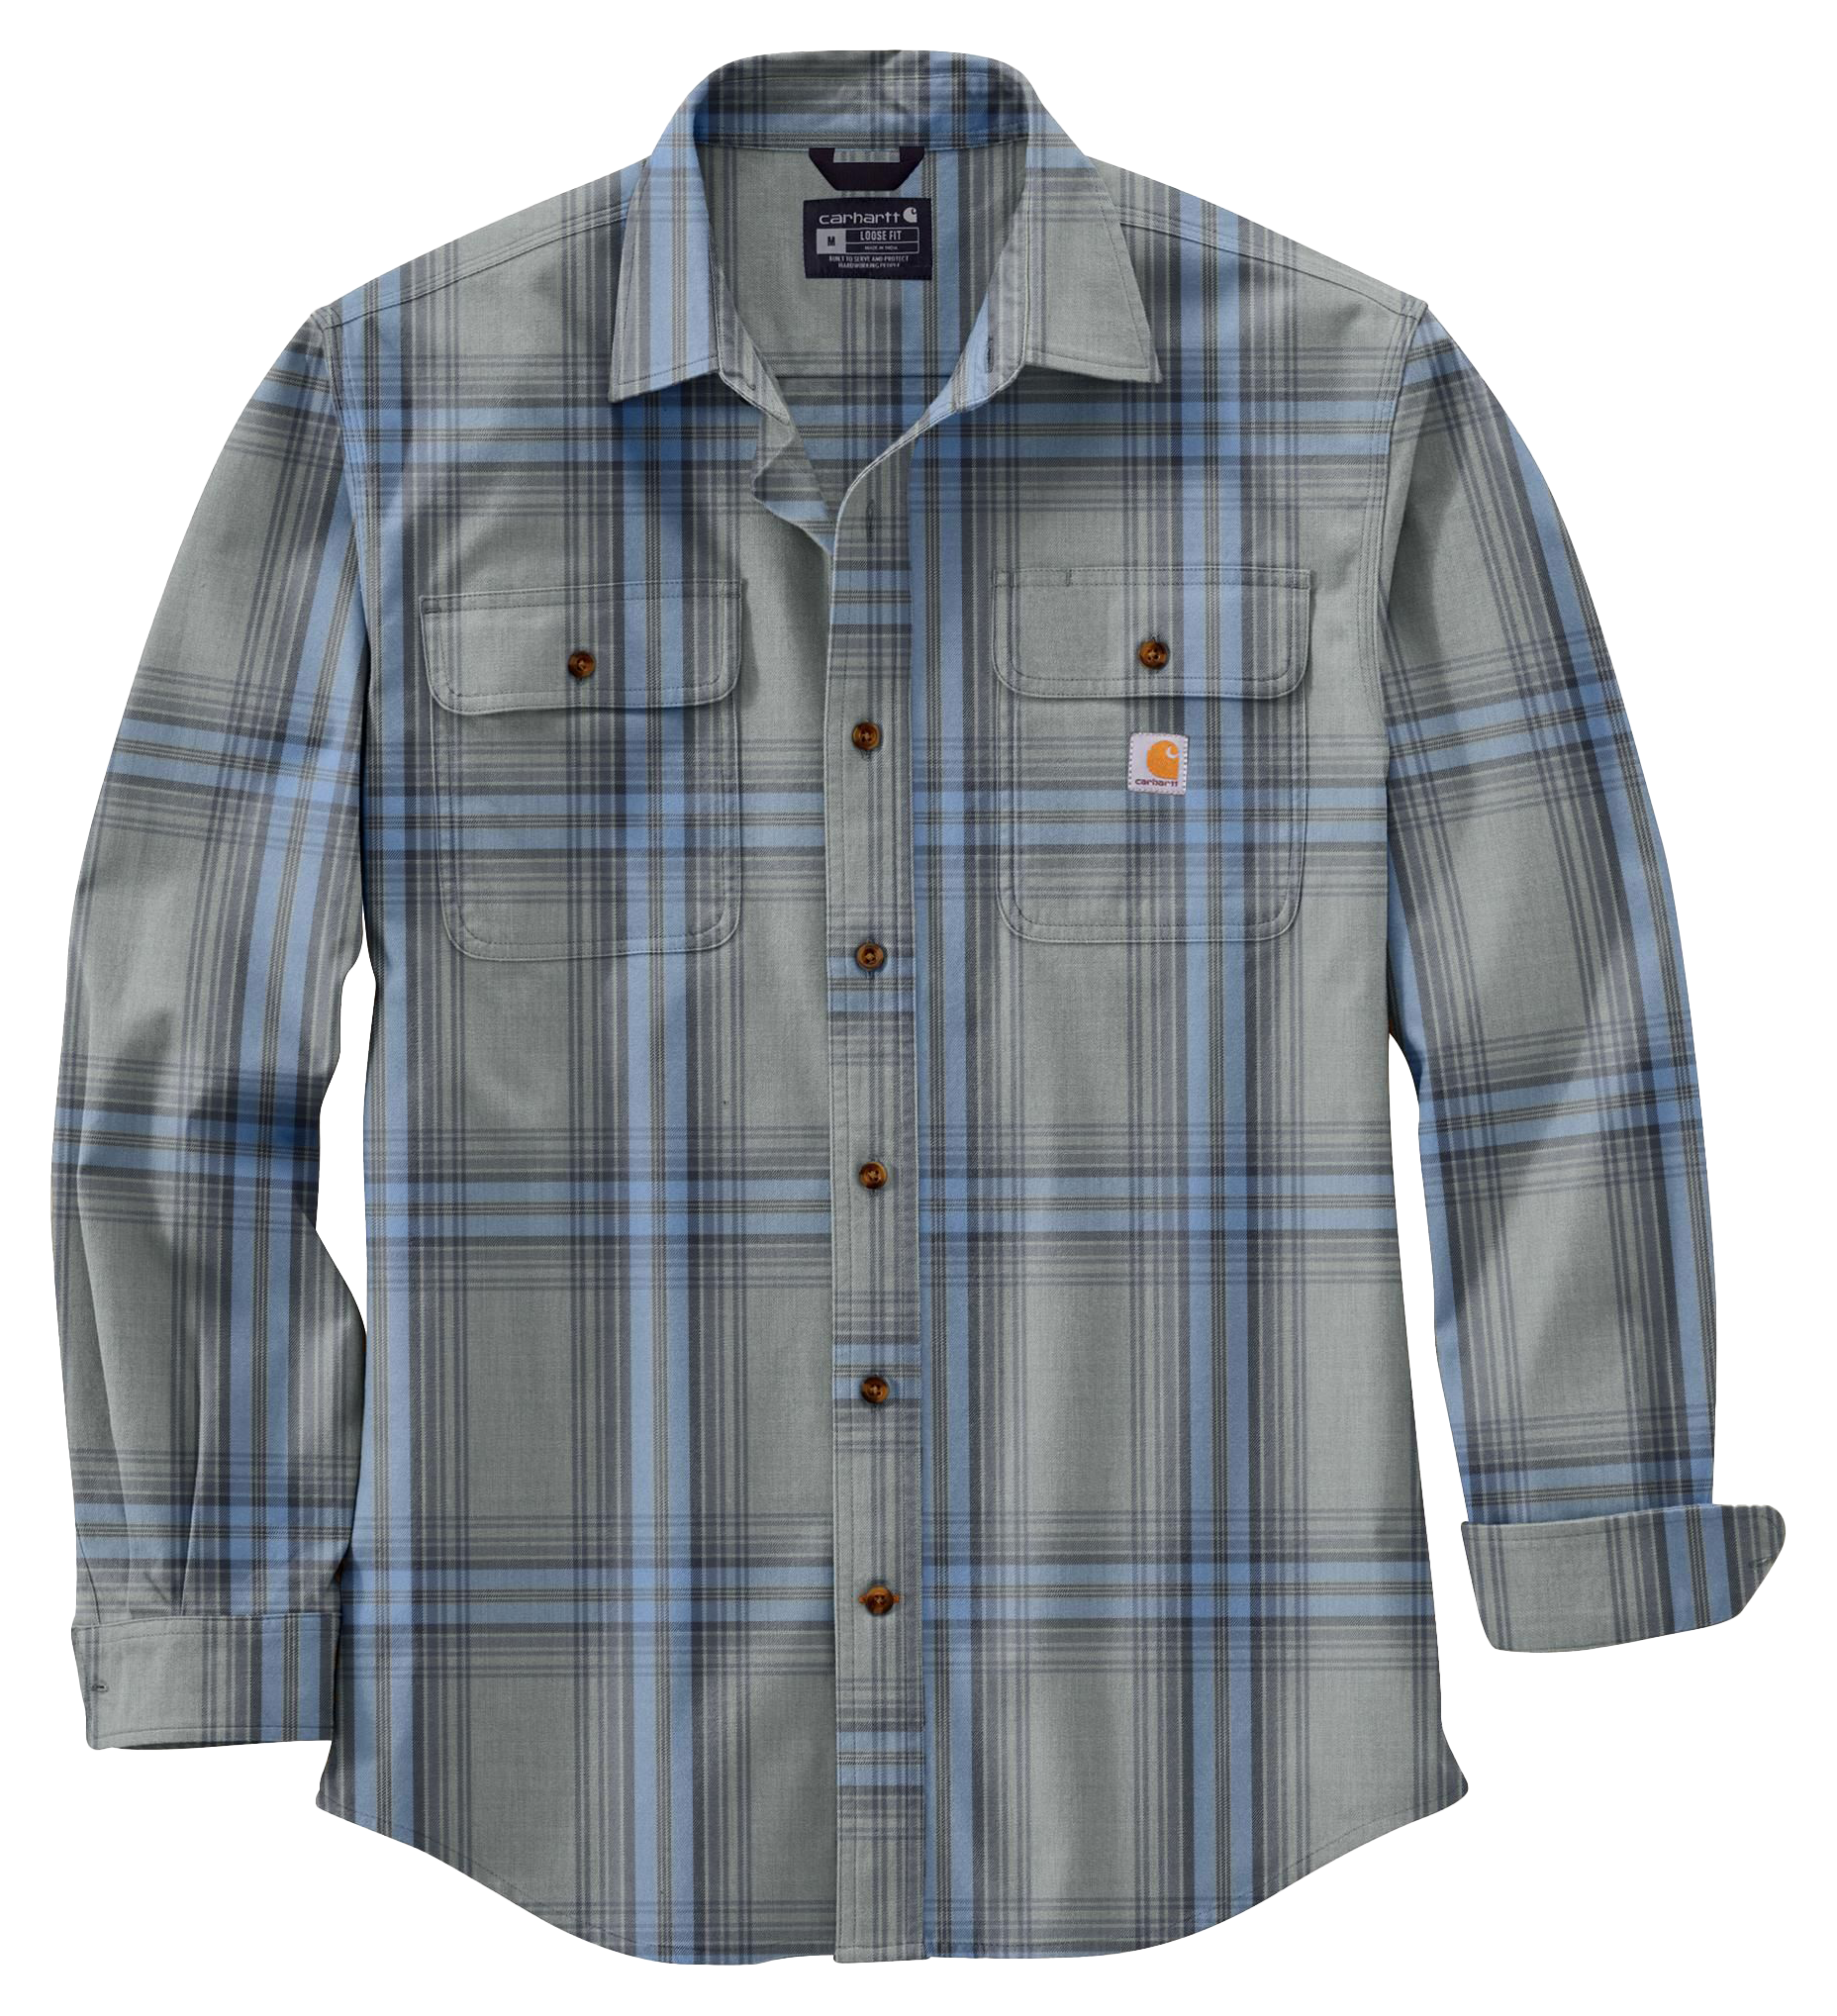 Carhartt Loose-Fit Heavyweight Flannel Plaid Long-Sleeve Button-Down Shirt for Men - Asphalt - 3XLT